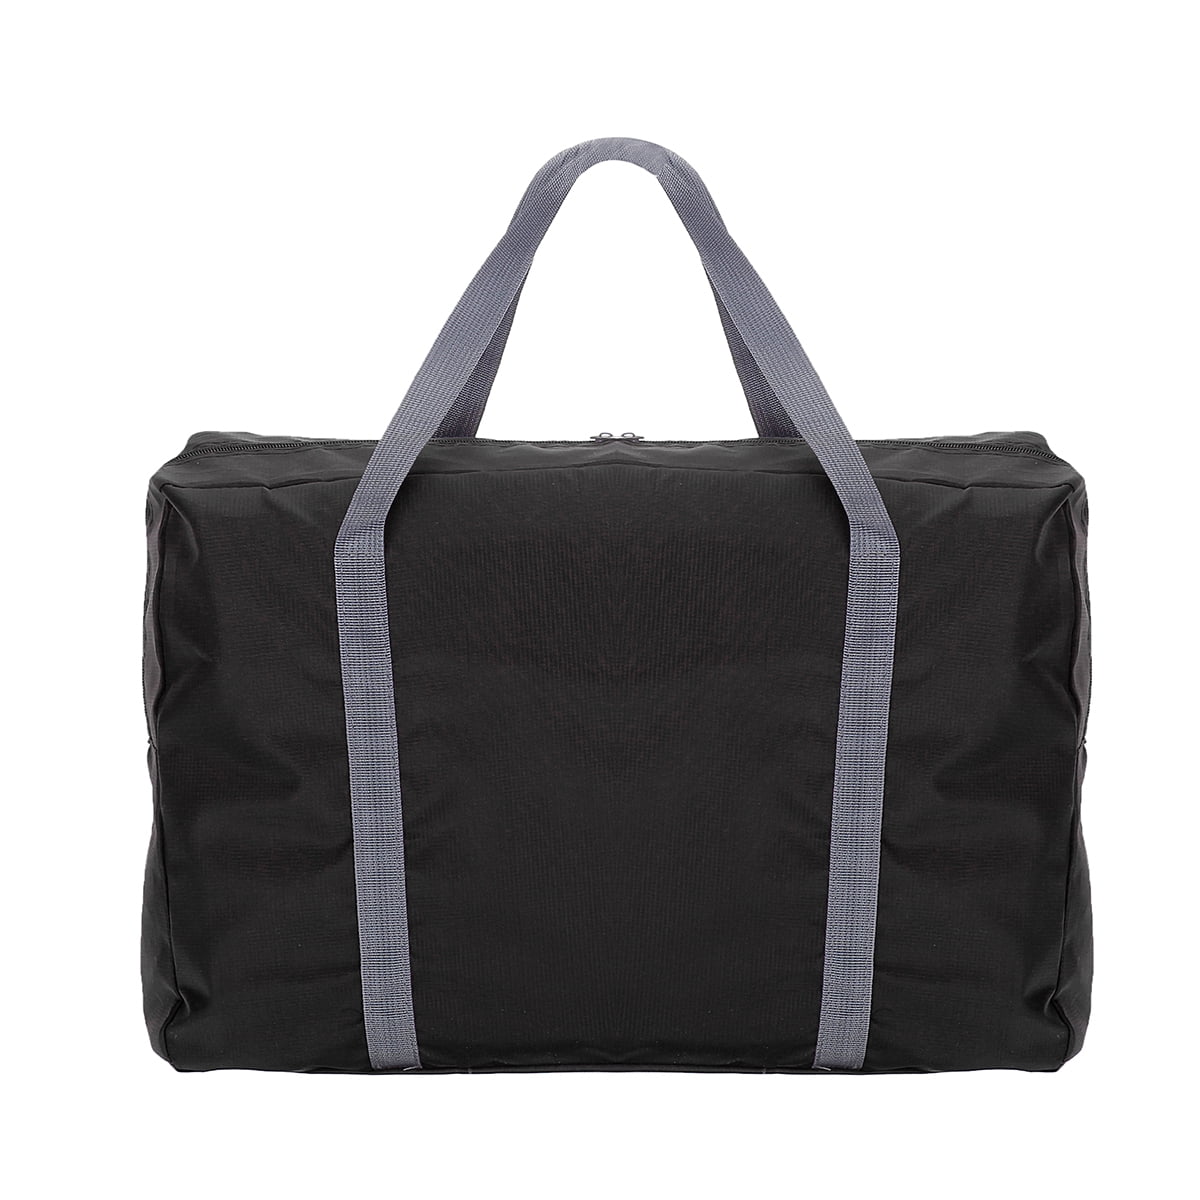 Foldable Lightweight Duffle Bag Waterproof Travel Storage Carry Luggage ...